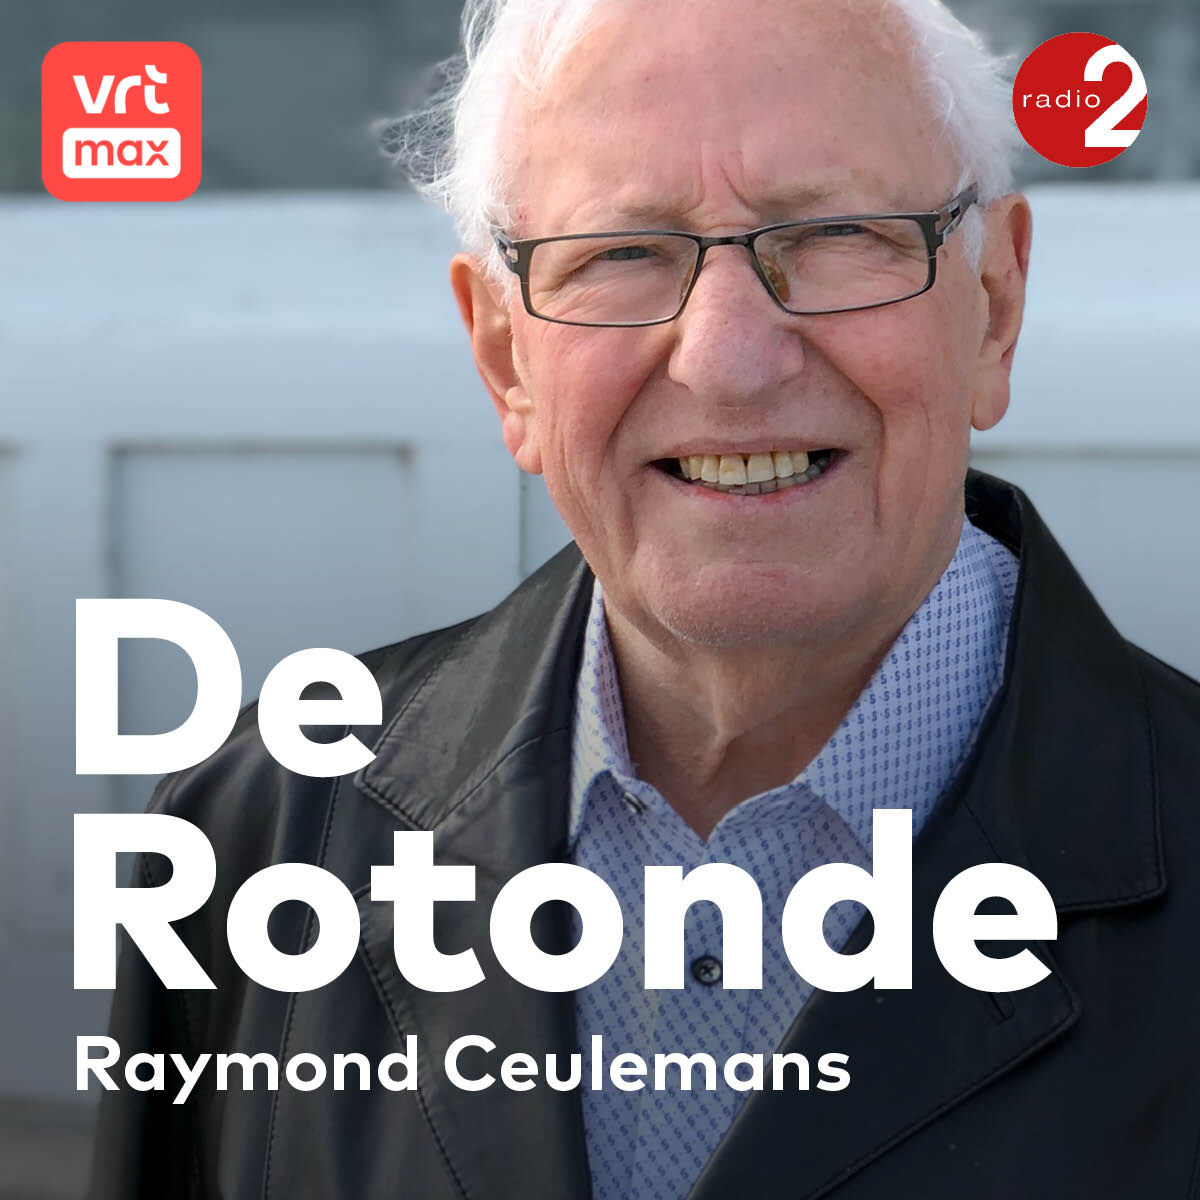 Raymond Ceulemans